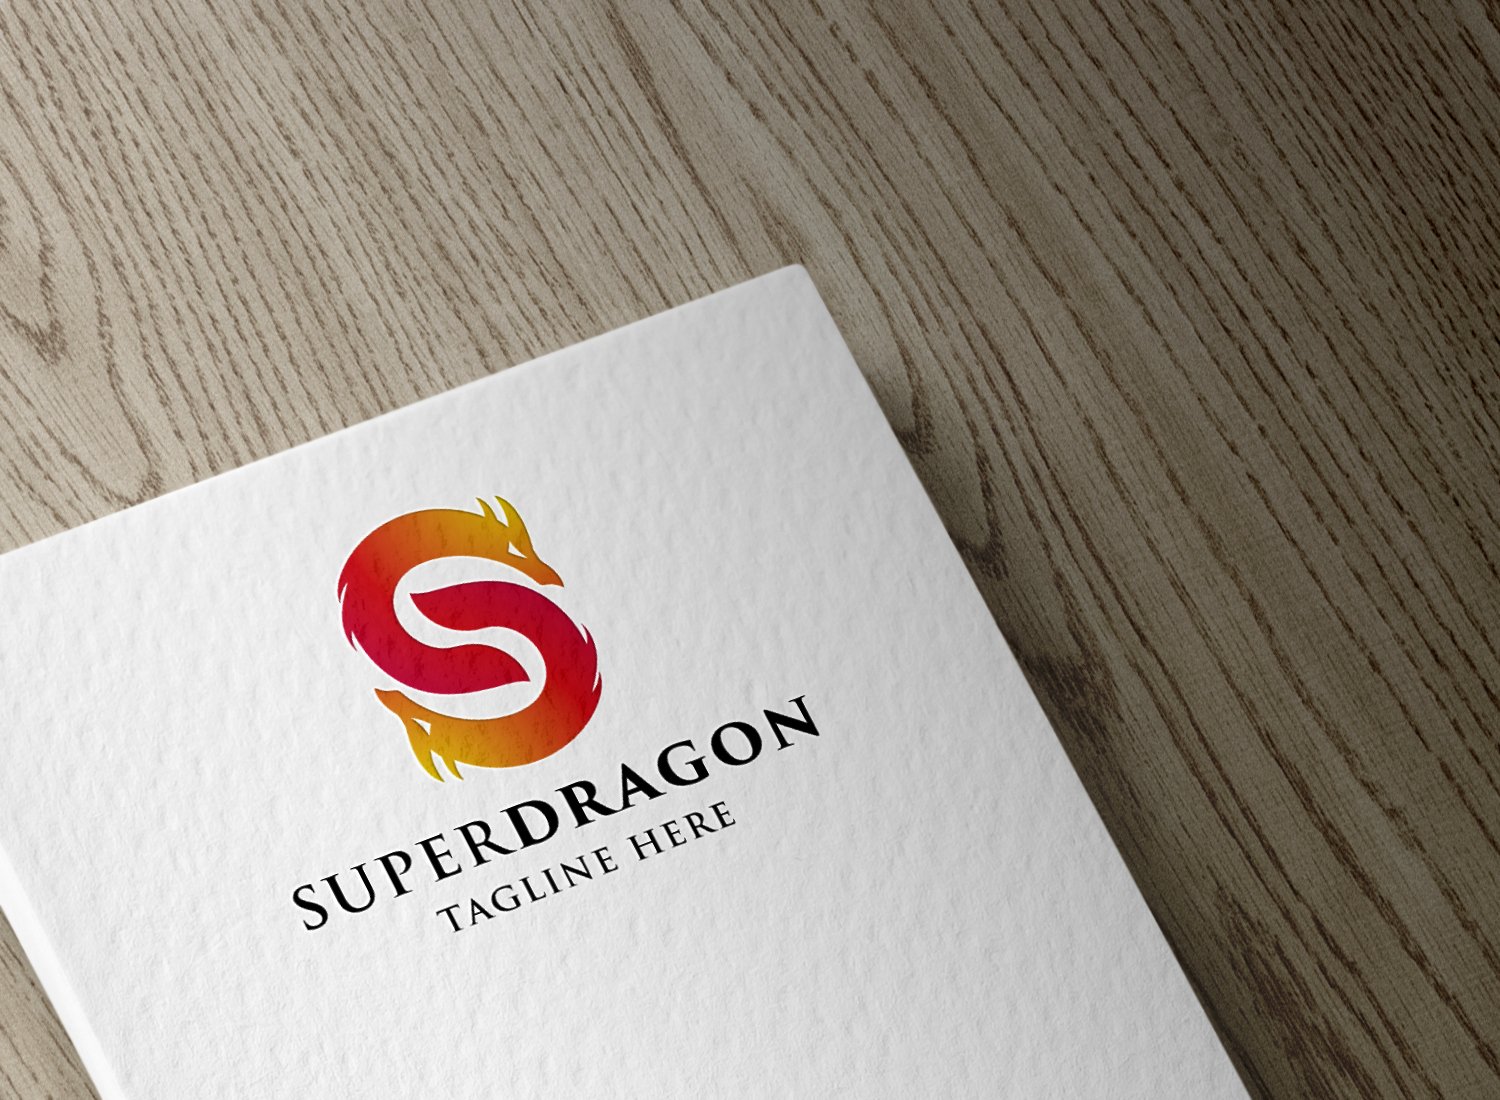 Super Dragon Letter S Logo cover image.